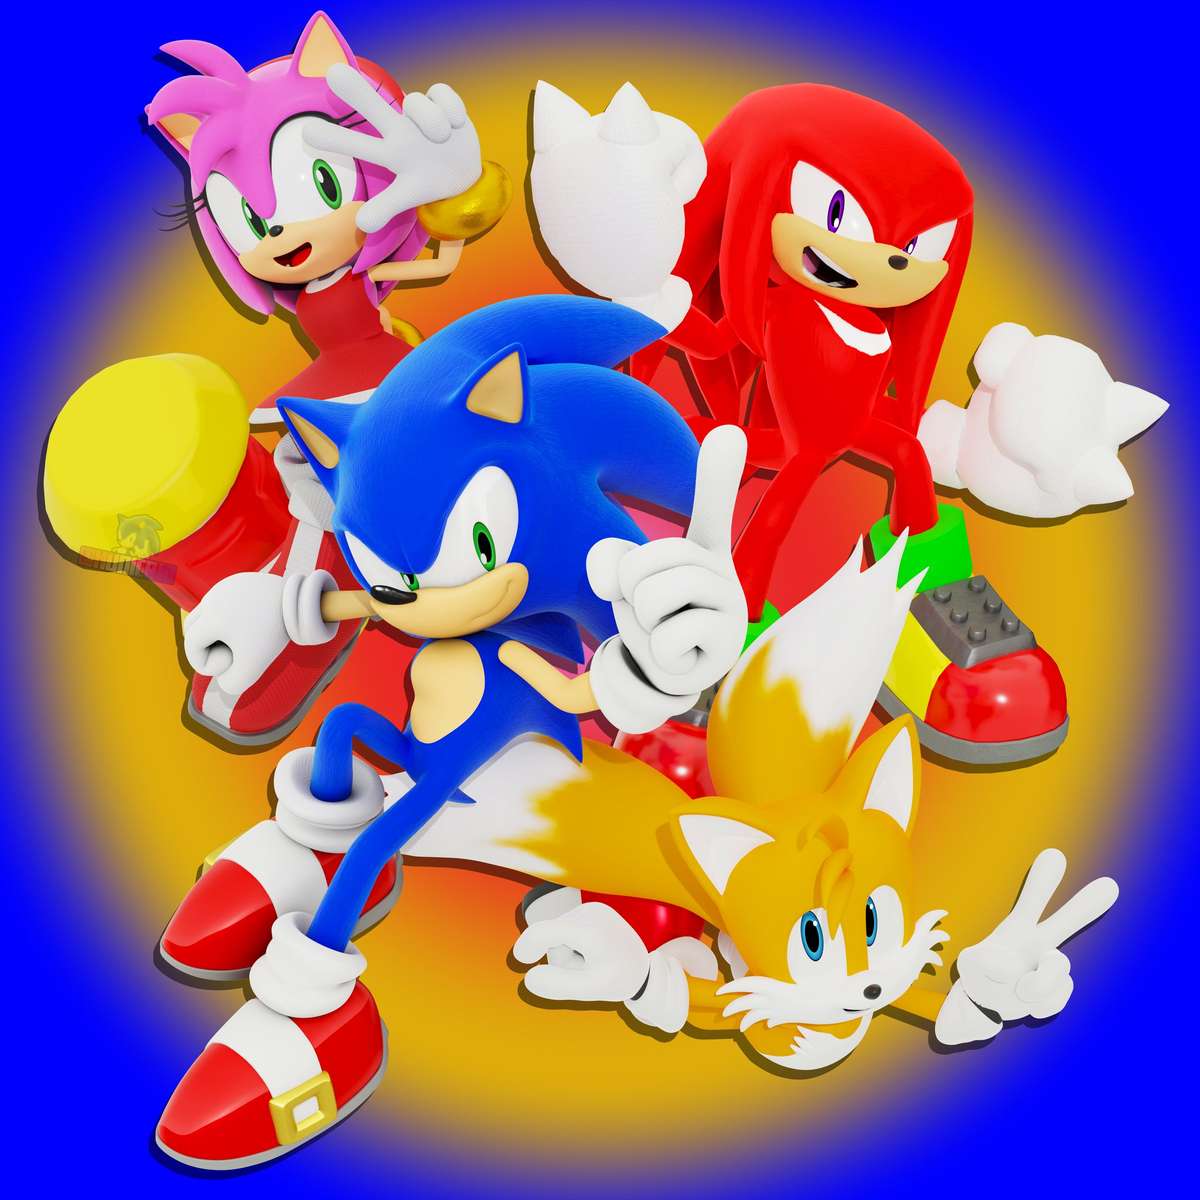 Sonic a sündisznó puzzle online fotóról